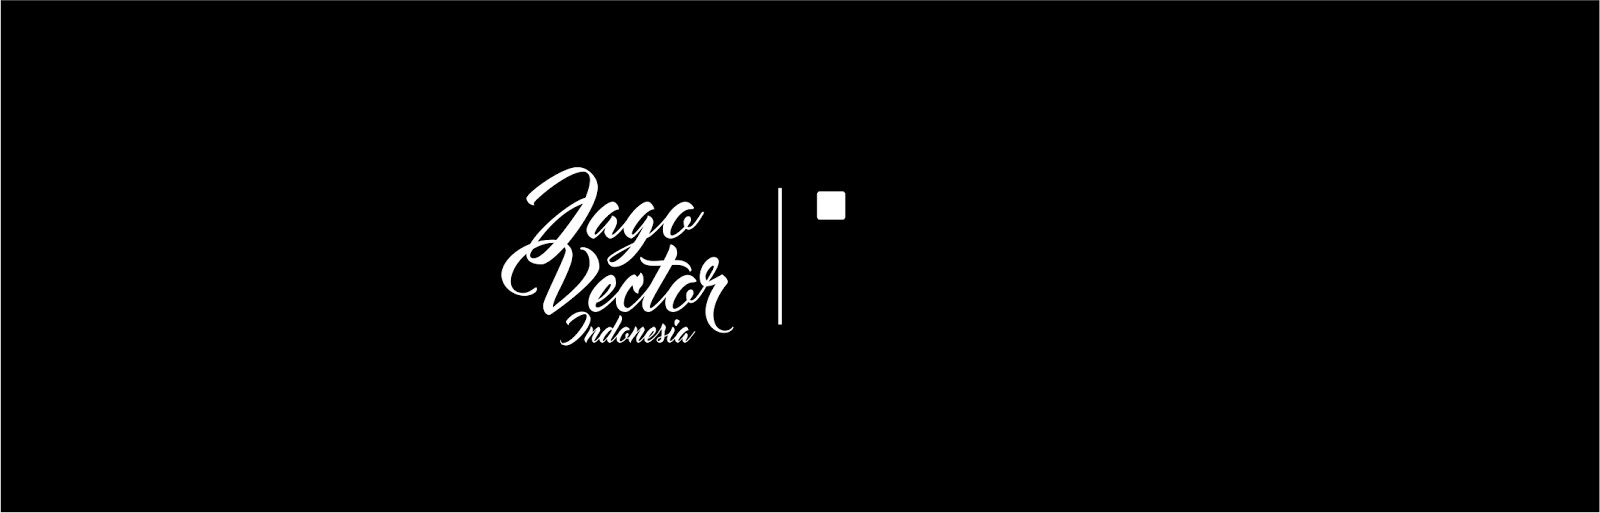 jago vector indonesia